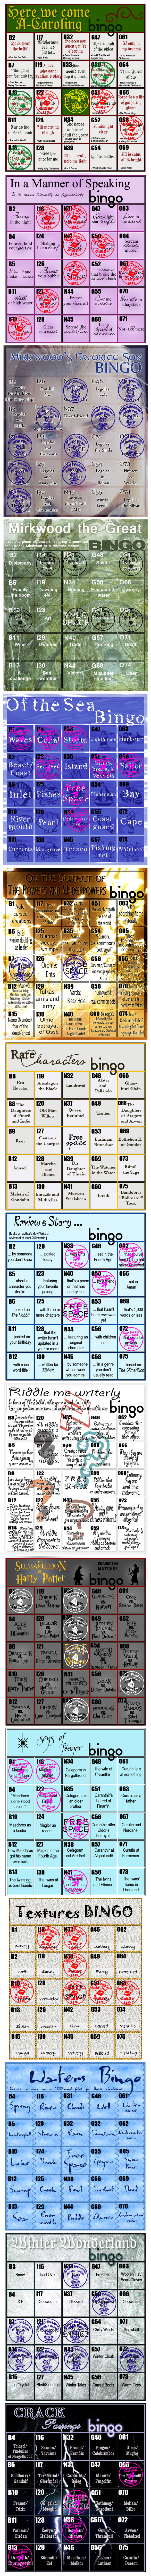 IgnobleBard's Bingo Cards